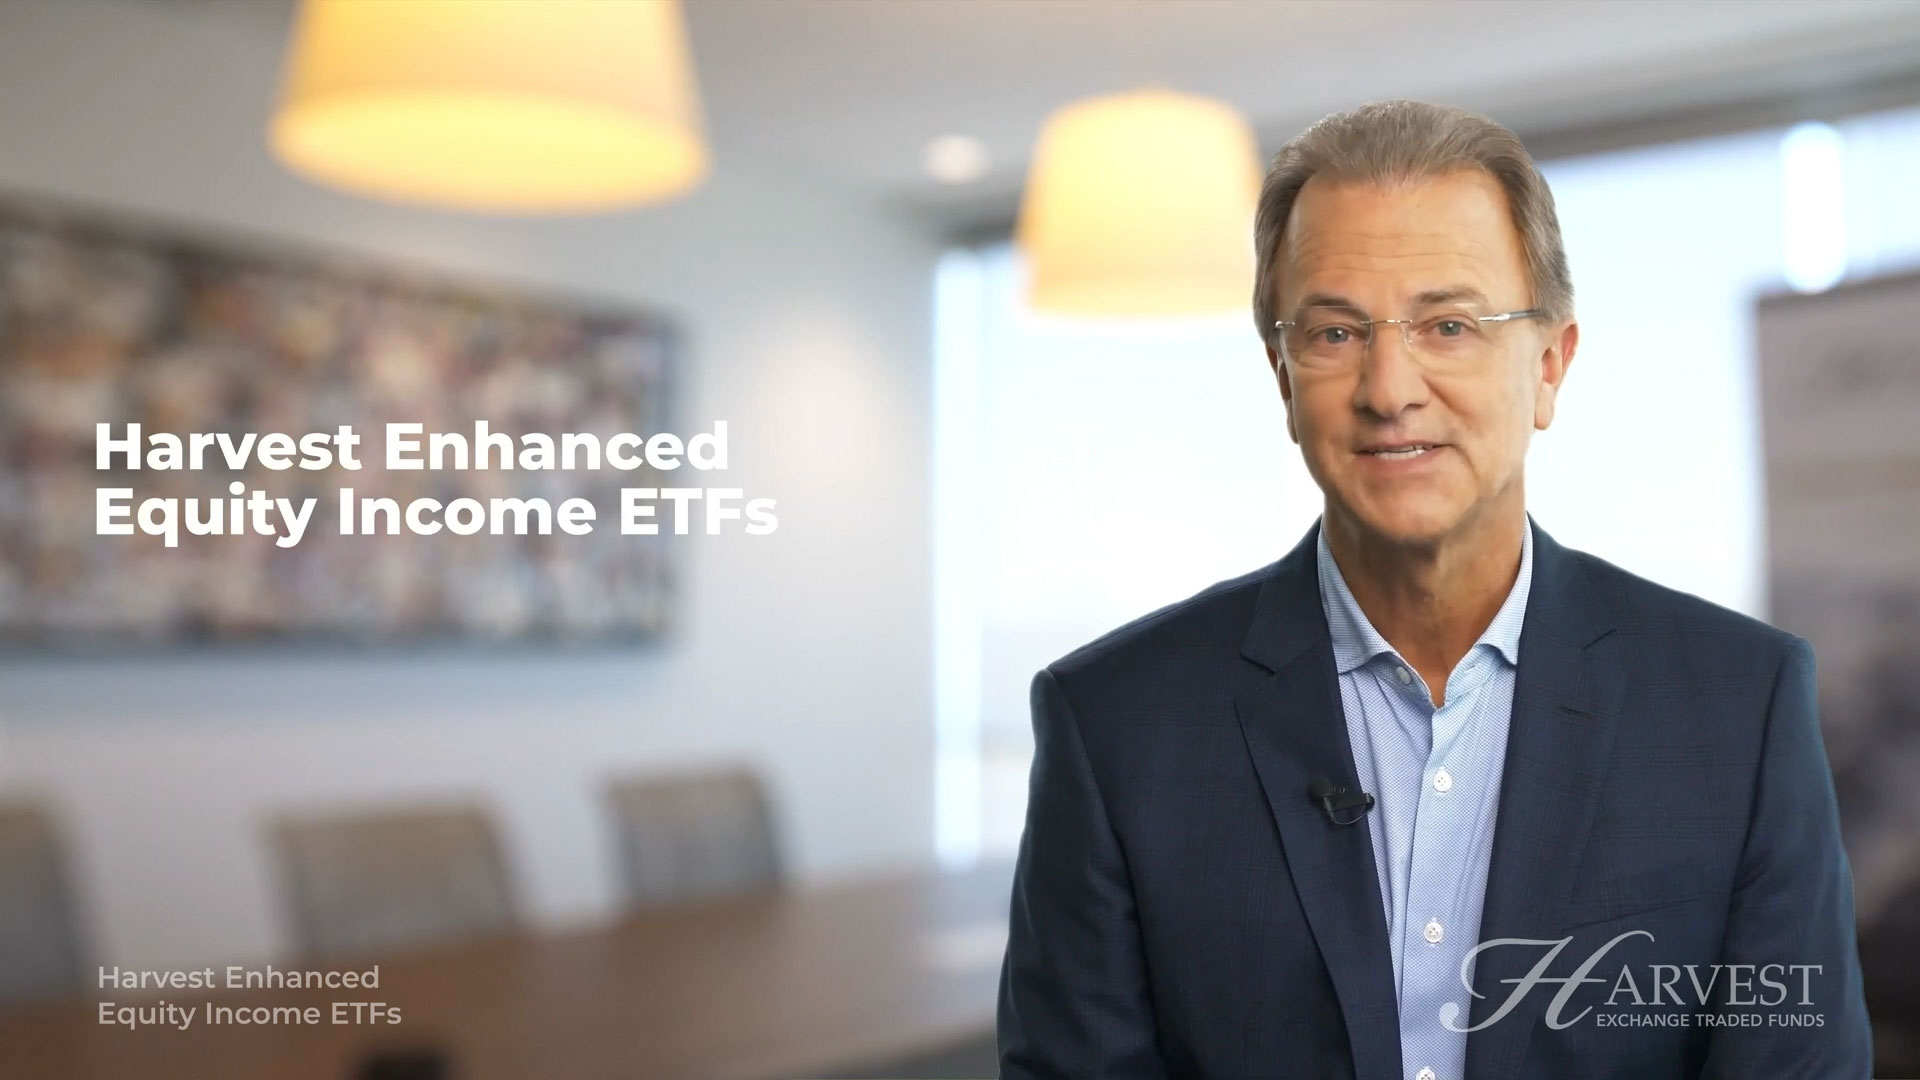 Harvest ETFs CEO explains Enhanced Equity Income ETFs